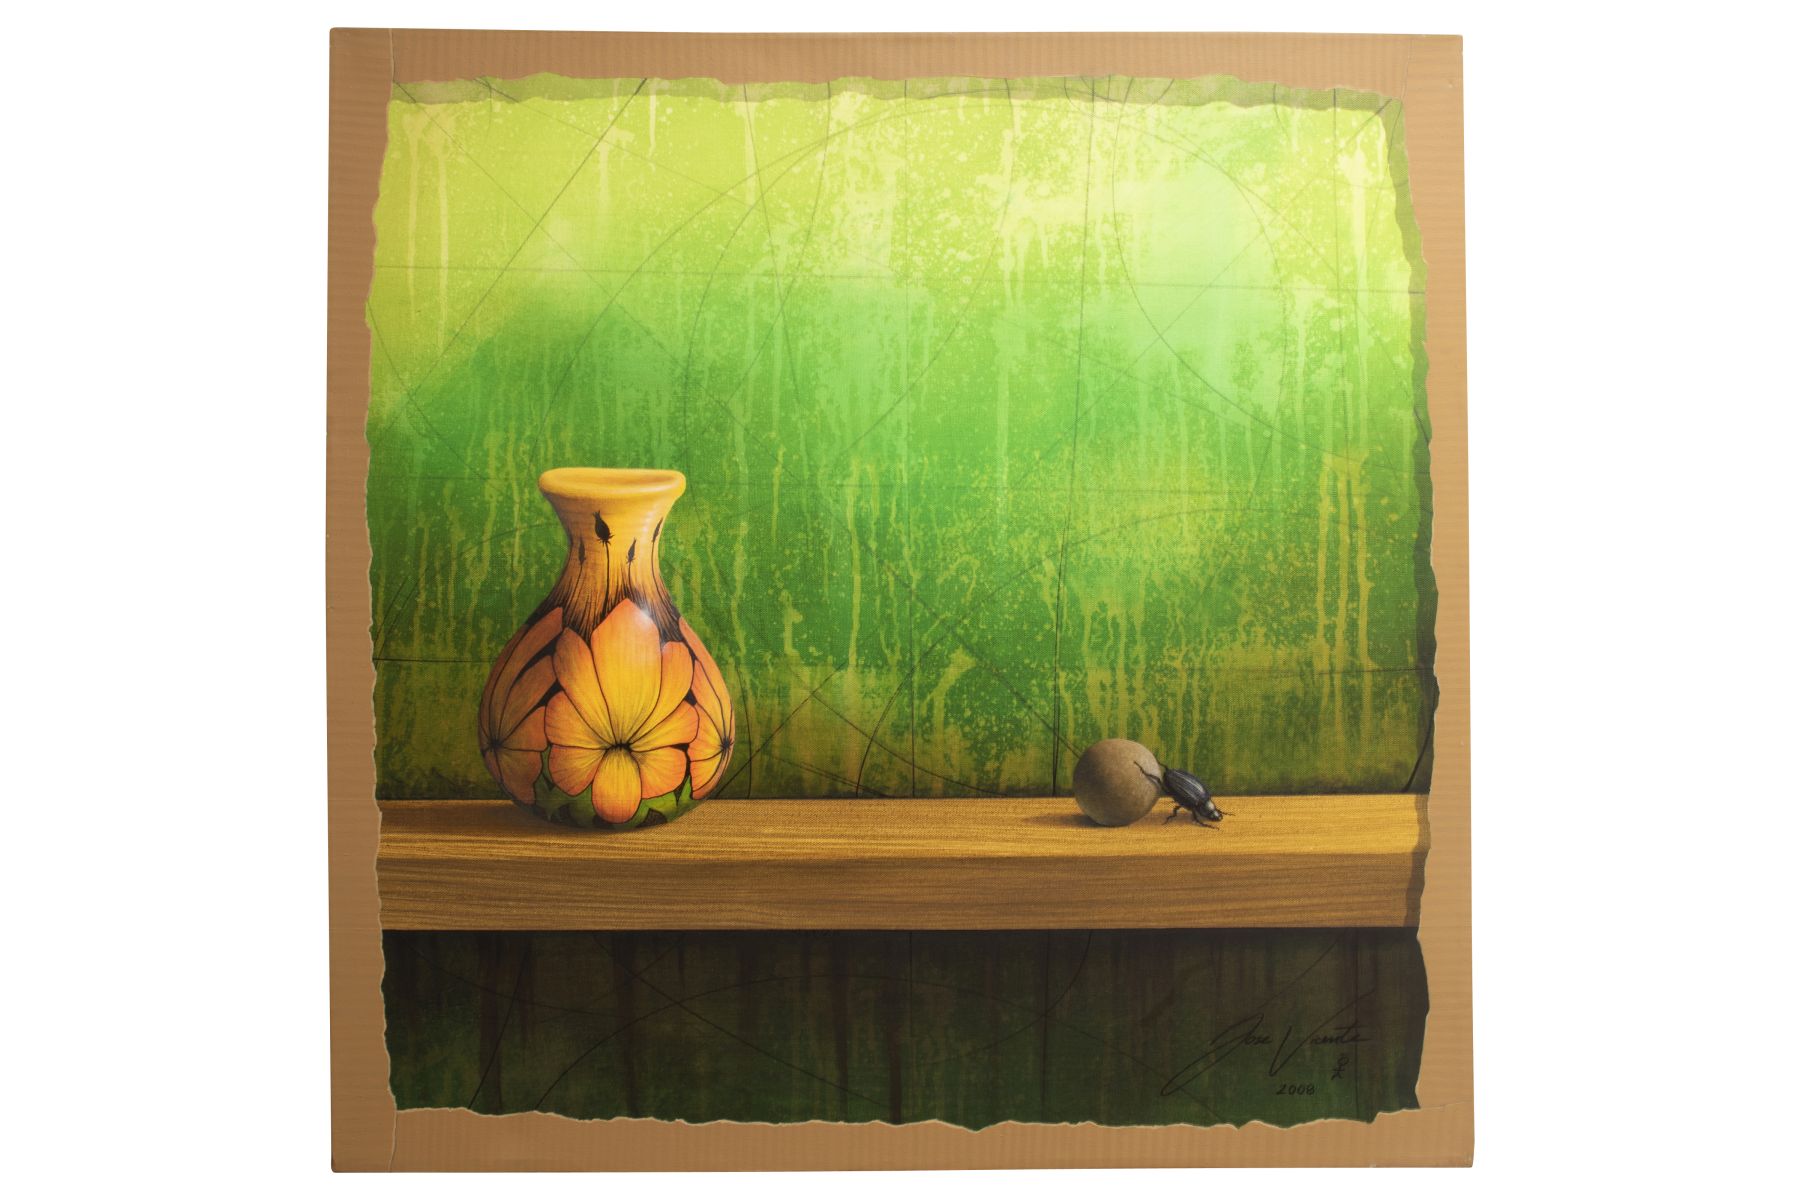 Jose Vicente (1977) " Vase against green background